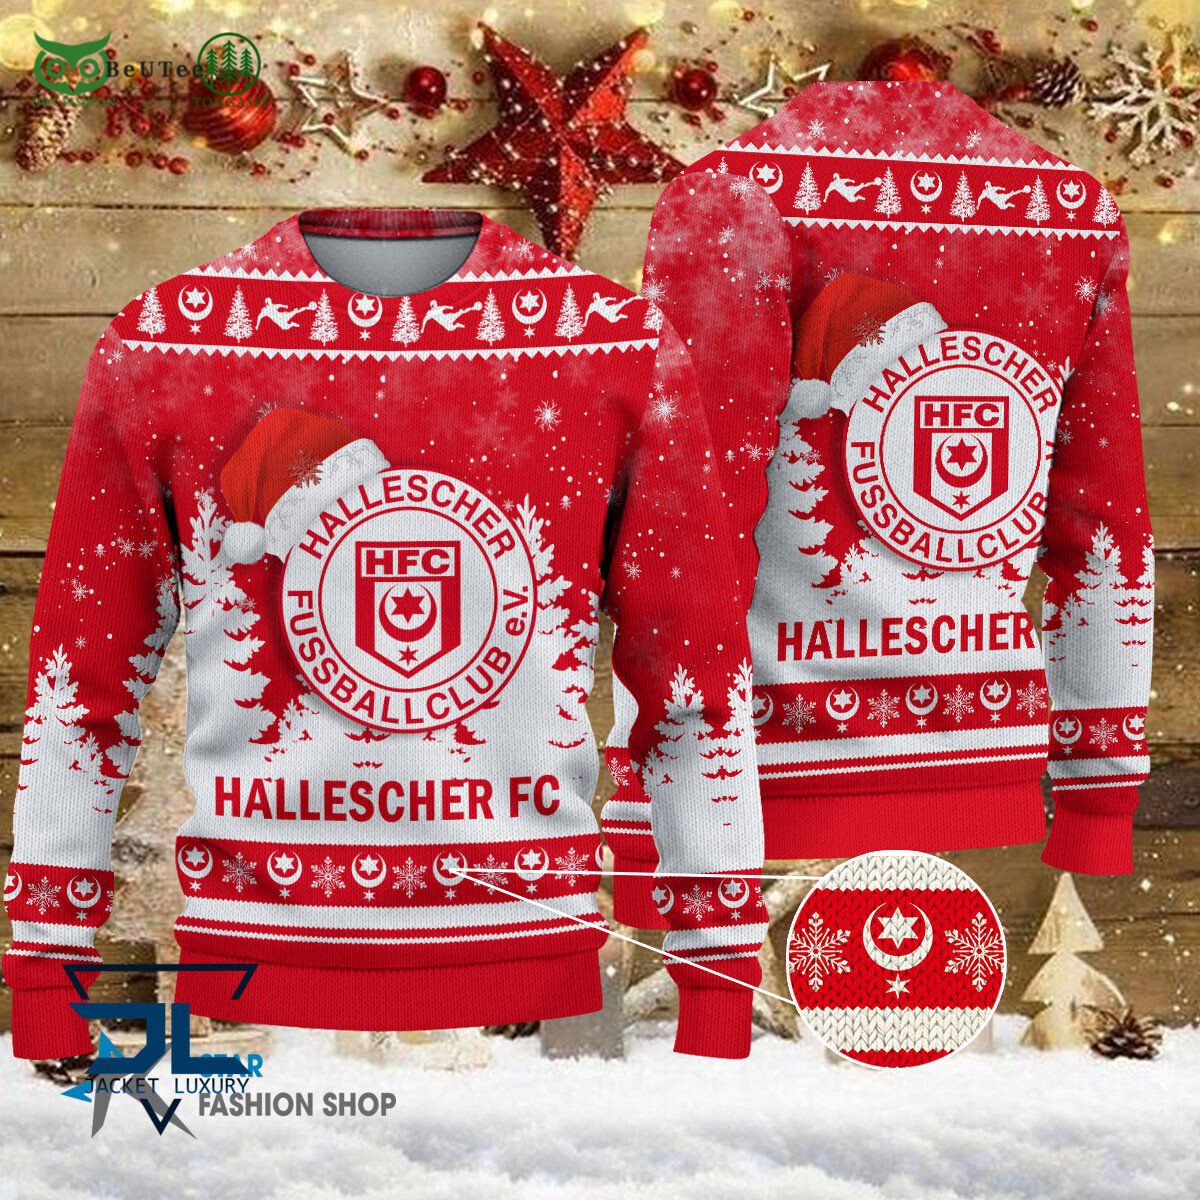 Hallescher FC Bundesliga Champions Ugly Sweater